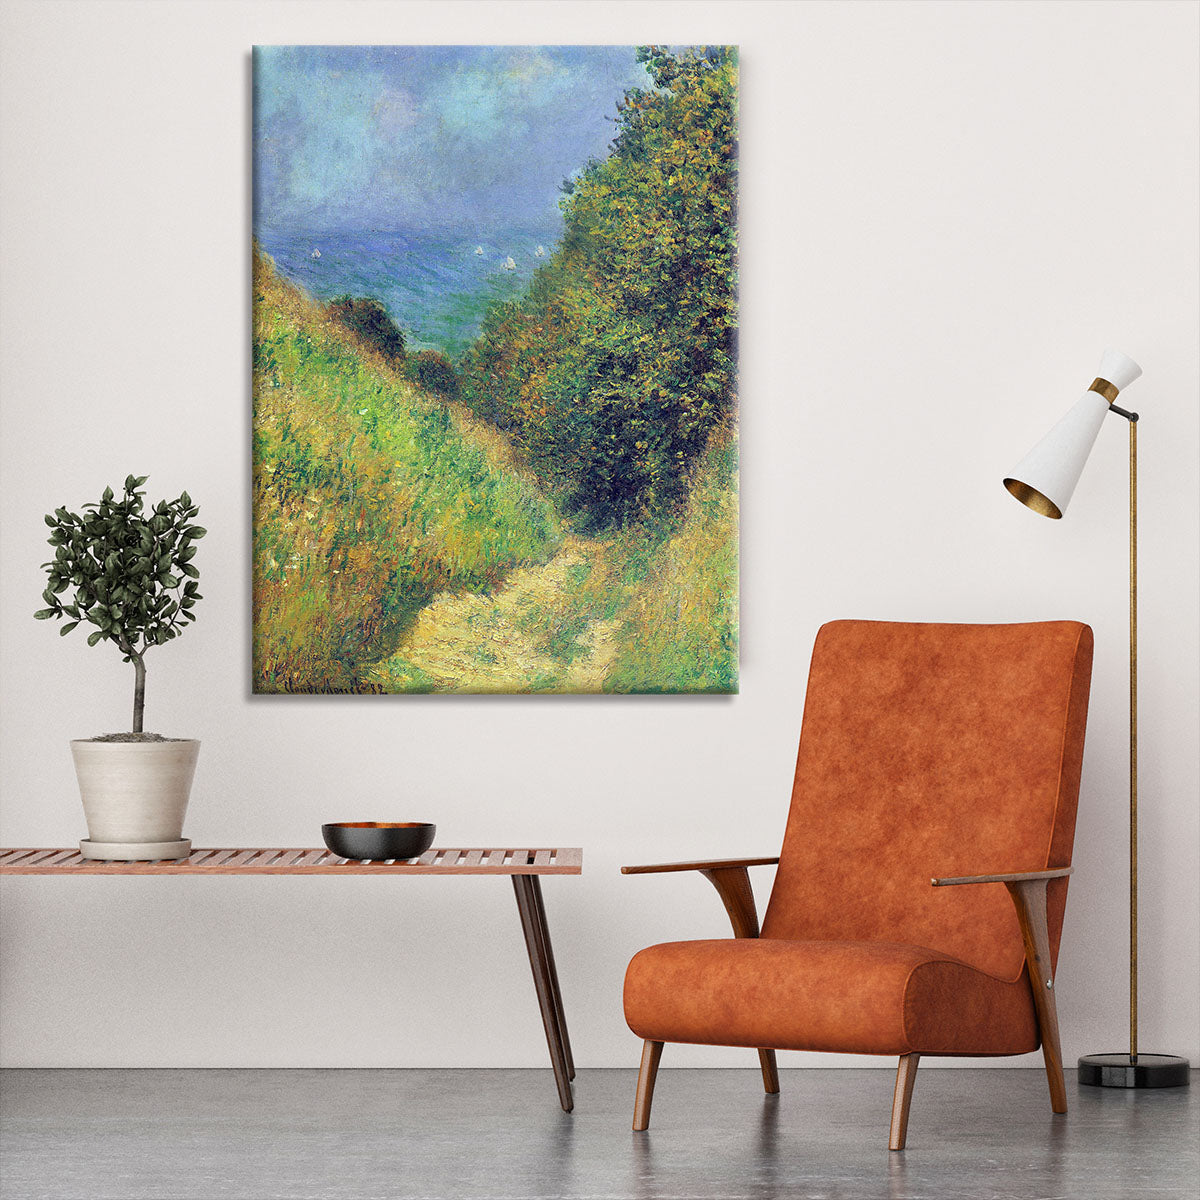 Pourville 2 by Monet Canvas Print or Poster - Canvas Art Rocks - 6